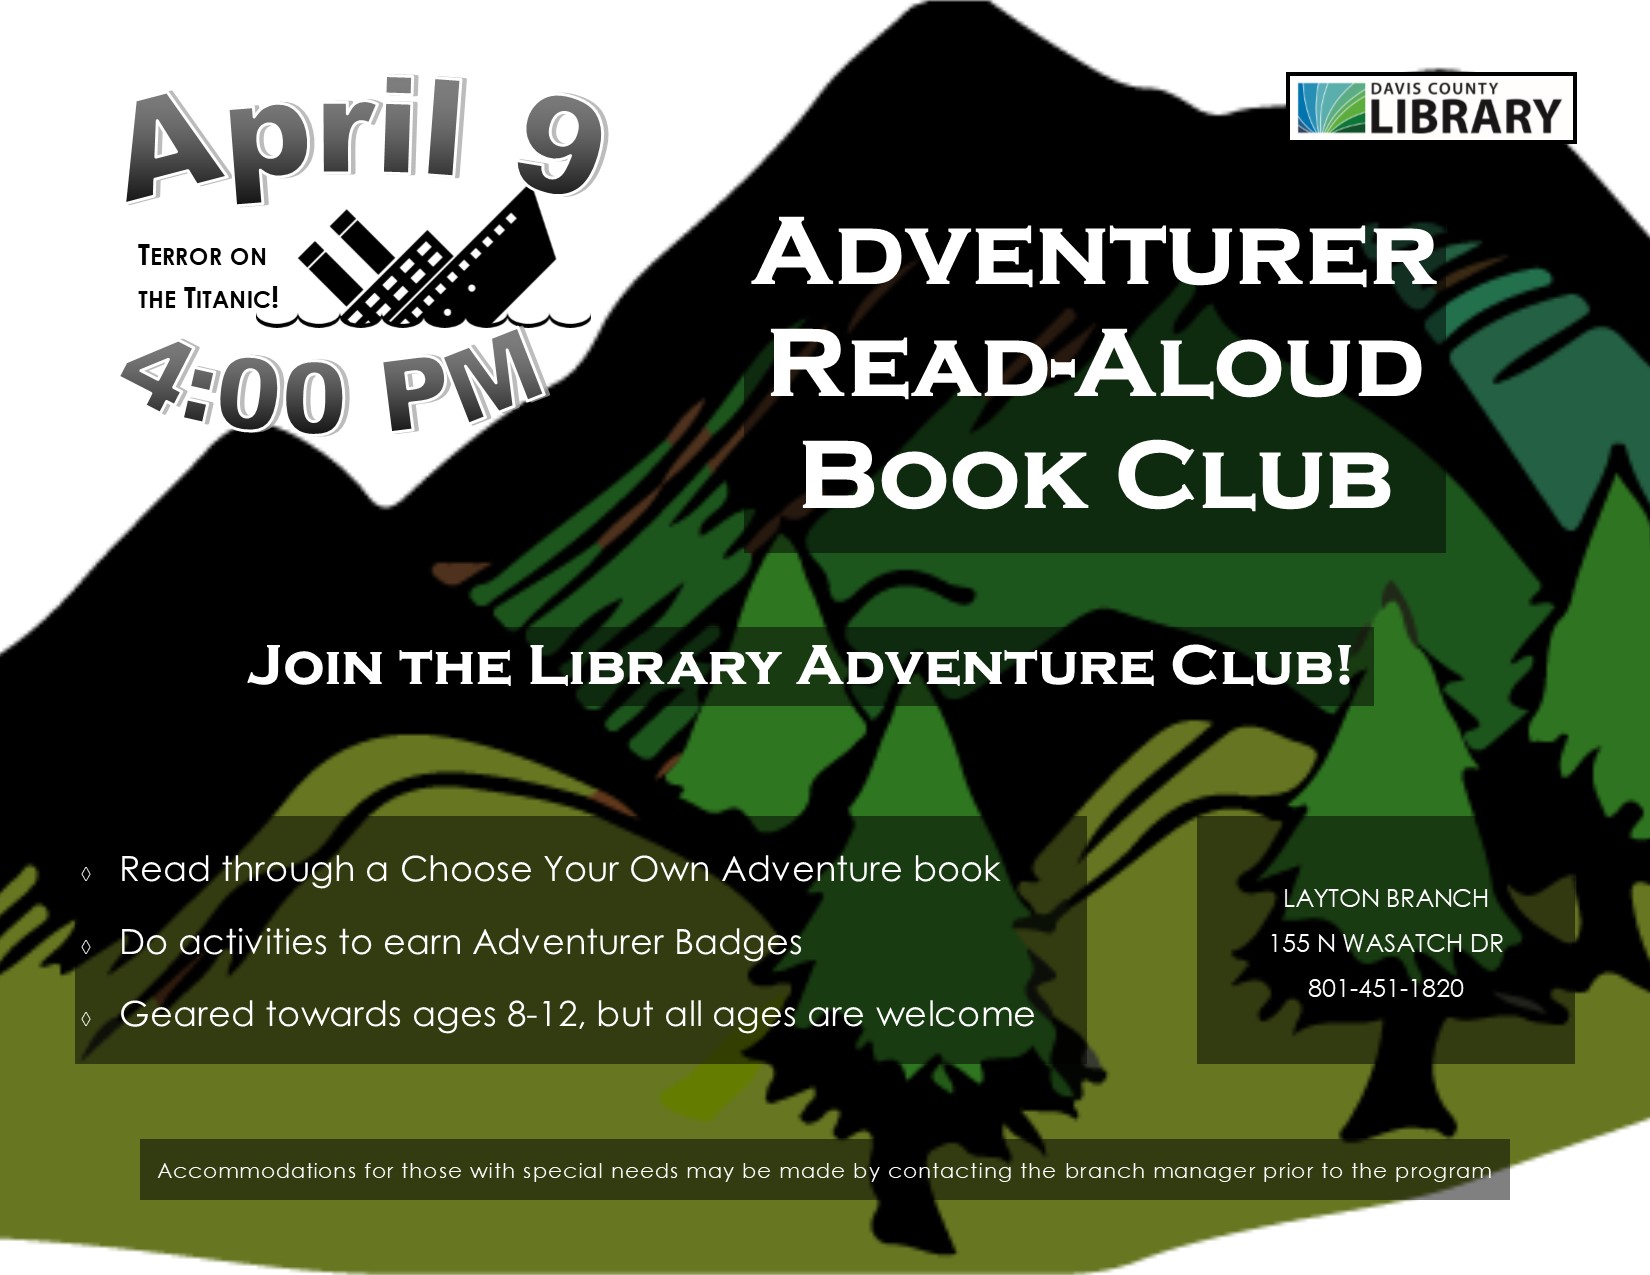 Adventurer Read-Aloud Book Club - April 9 4:00 PM